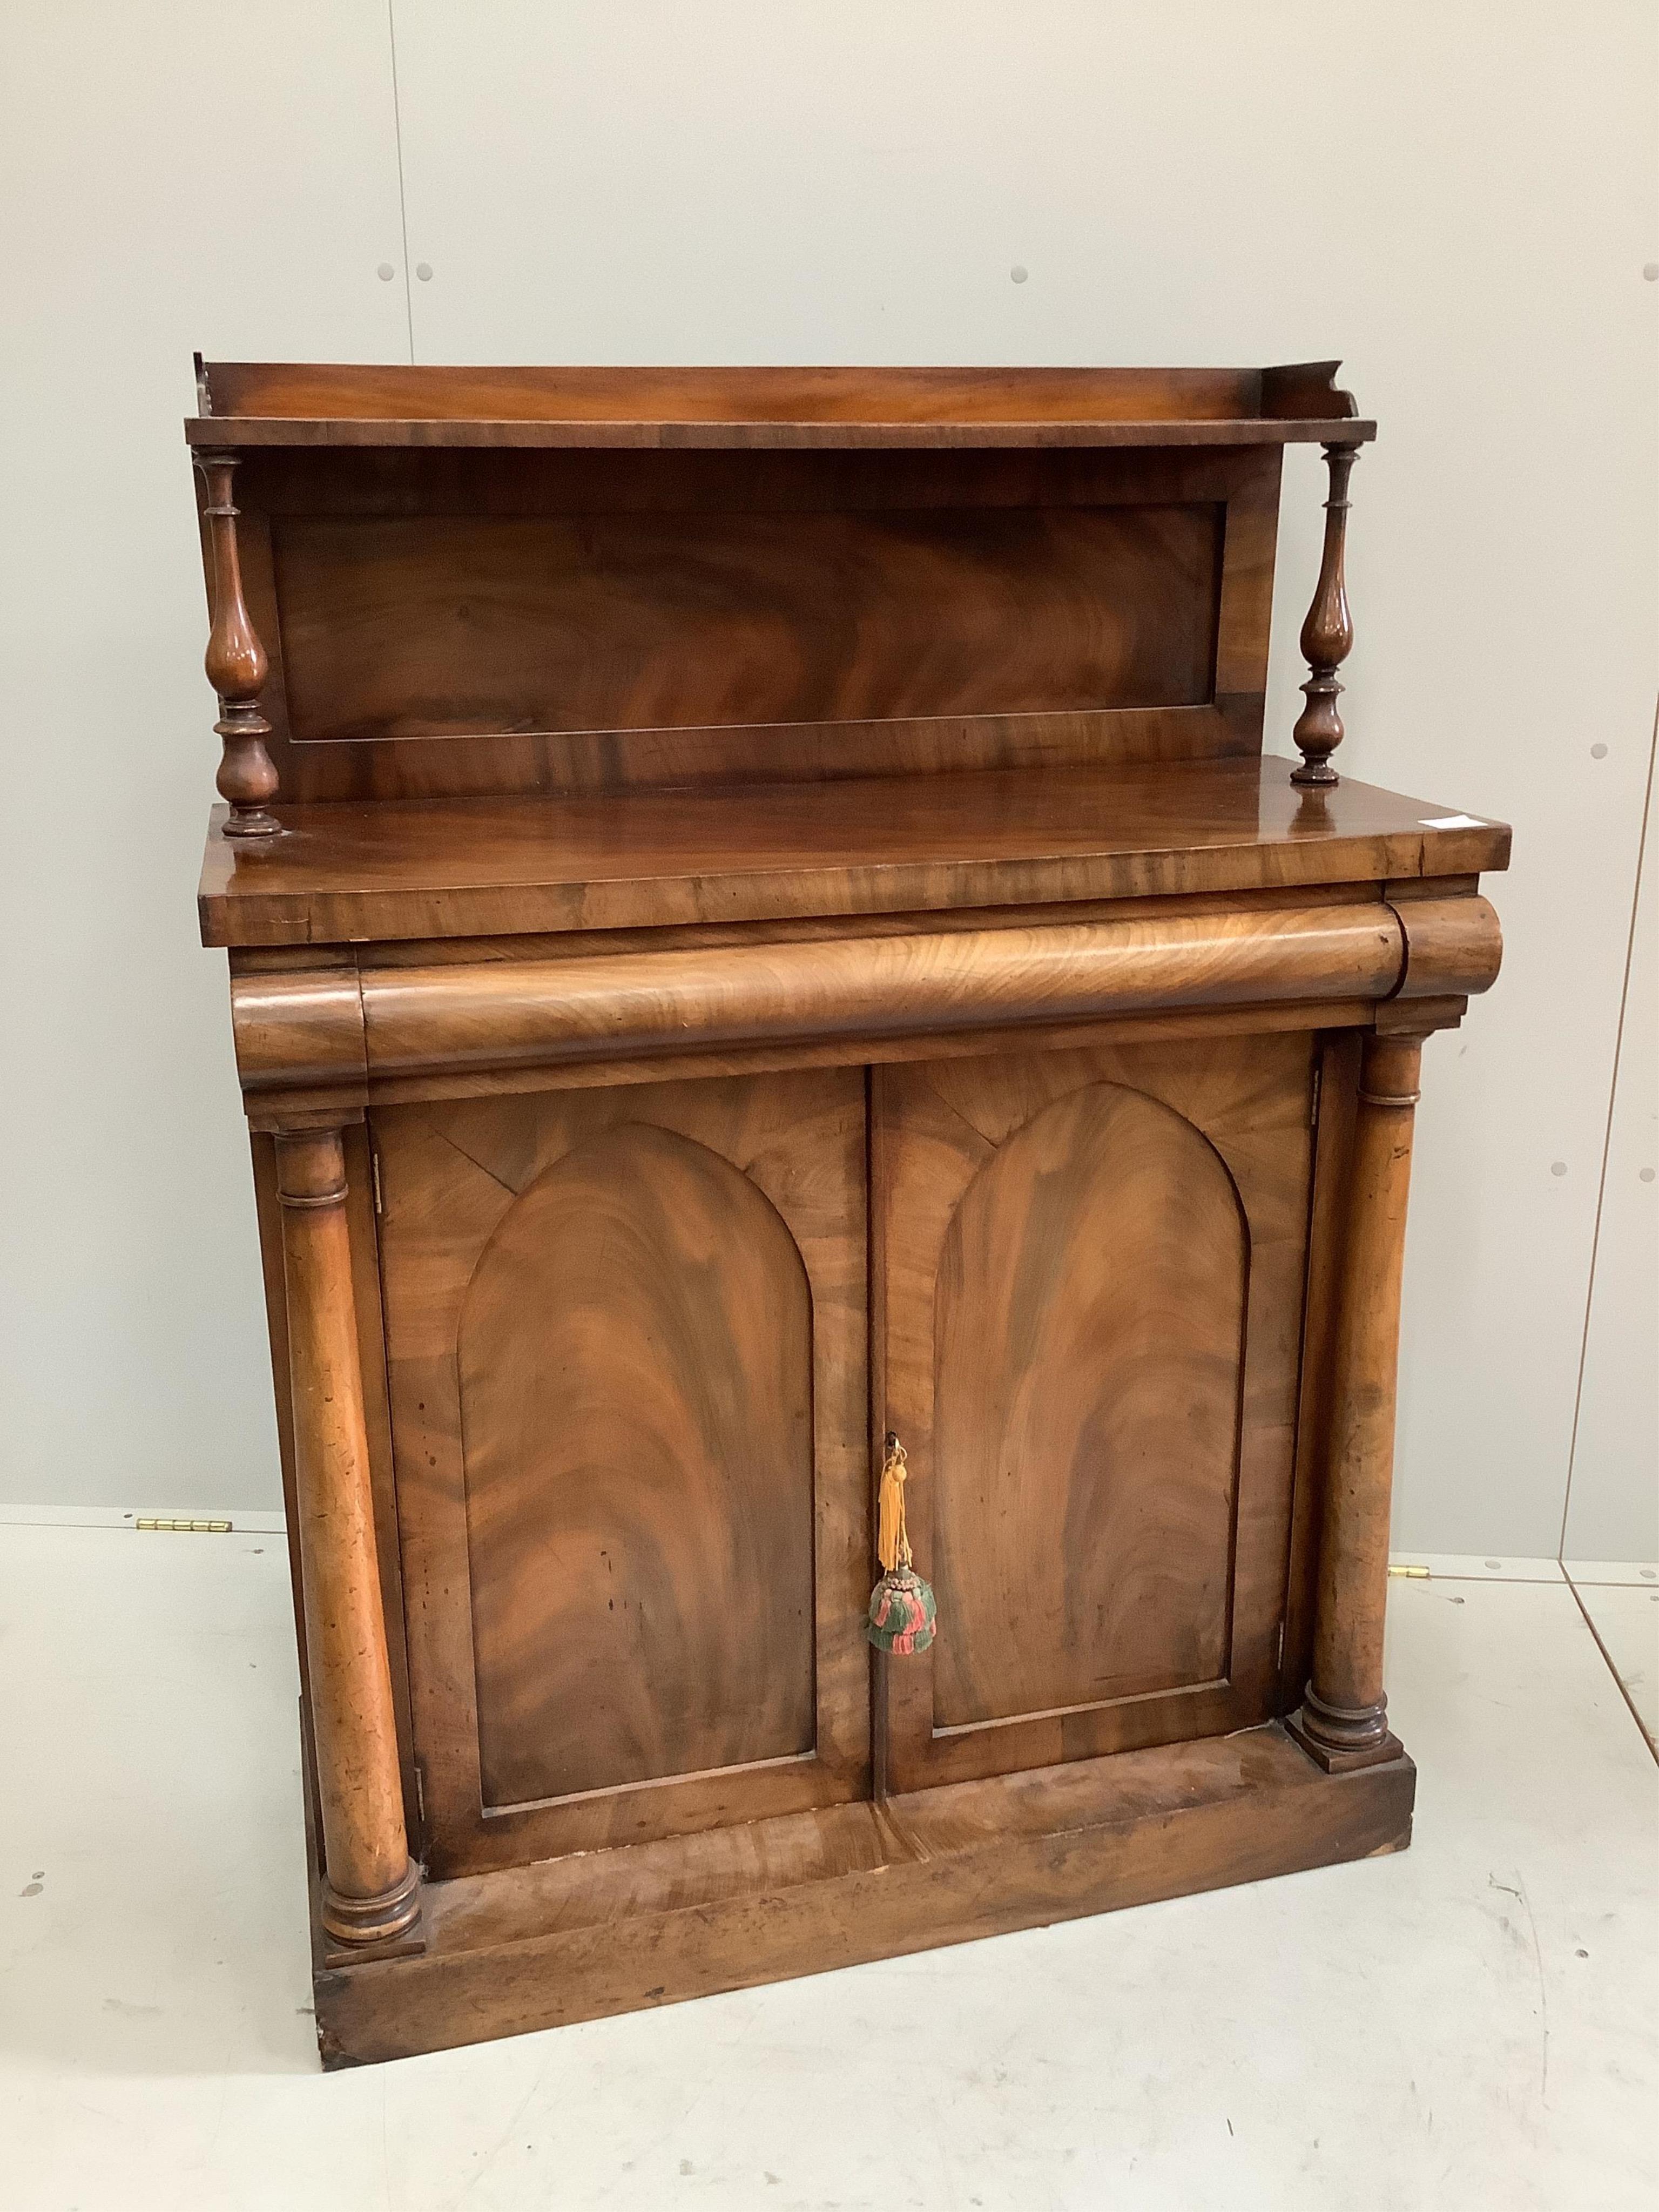 An early Victorian mahogany chiffonier, width 91cm, depth 43cm, height 124cm. Condition - fair